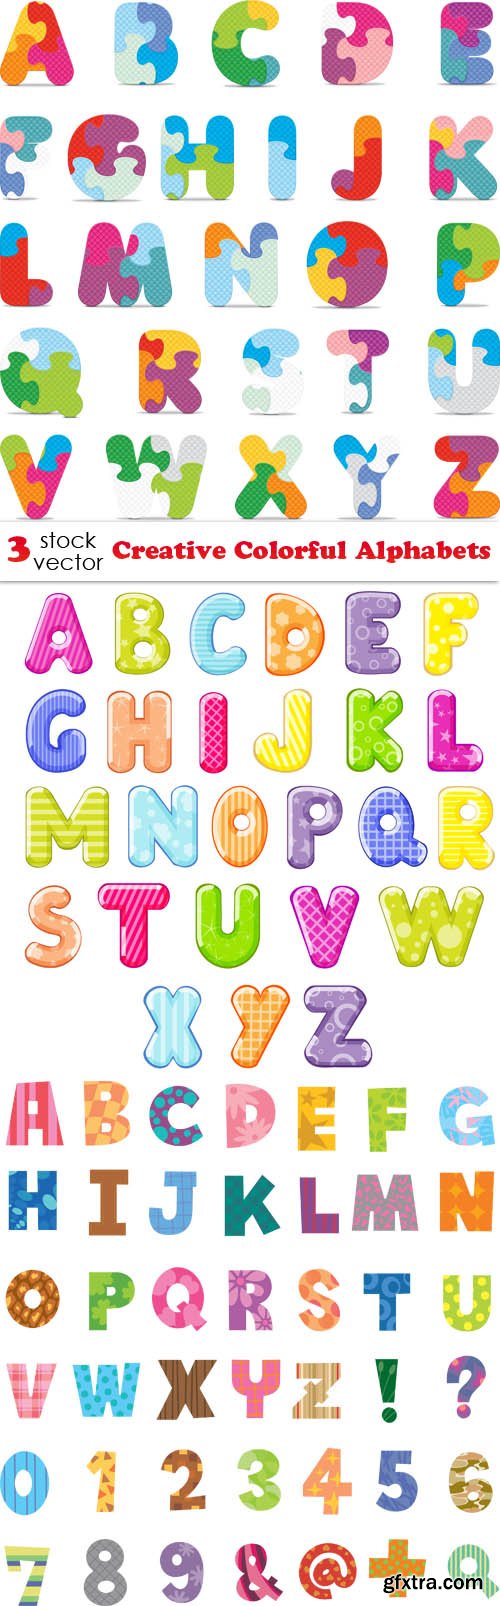 Vectors - Creative Colorful Alphabets